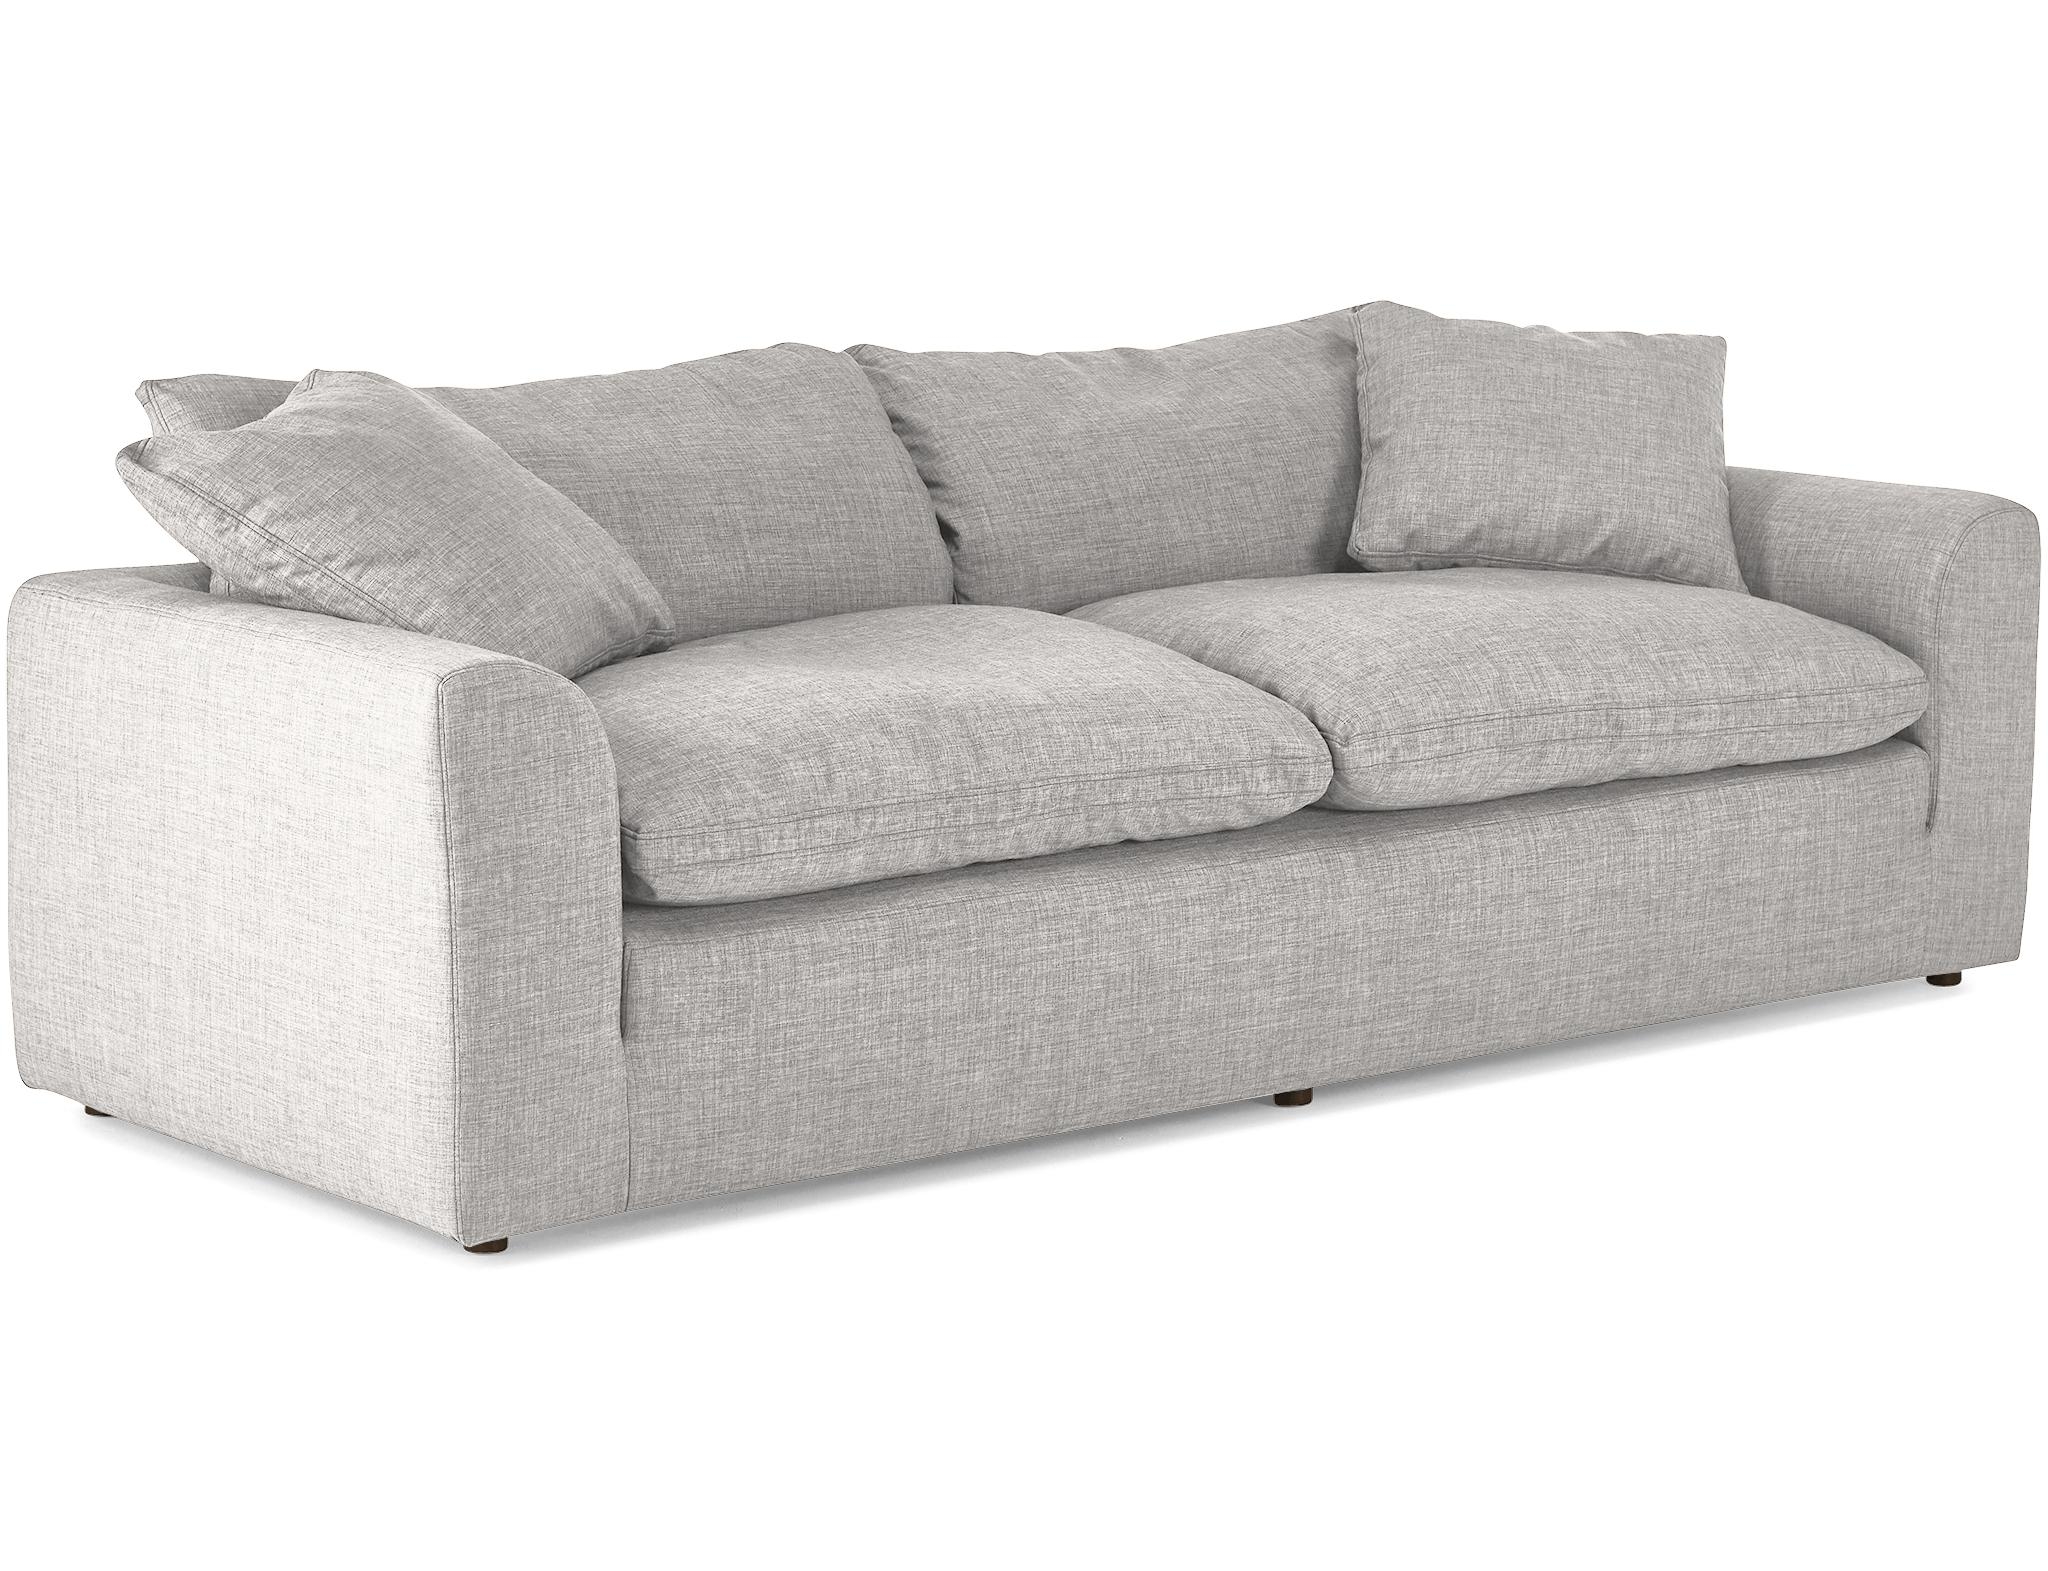 Gray Bryant Mid Century Modern Sofa - Sunbrella Premier Fog - Image 1